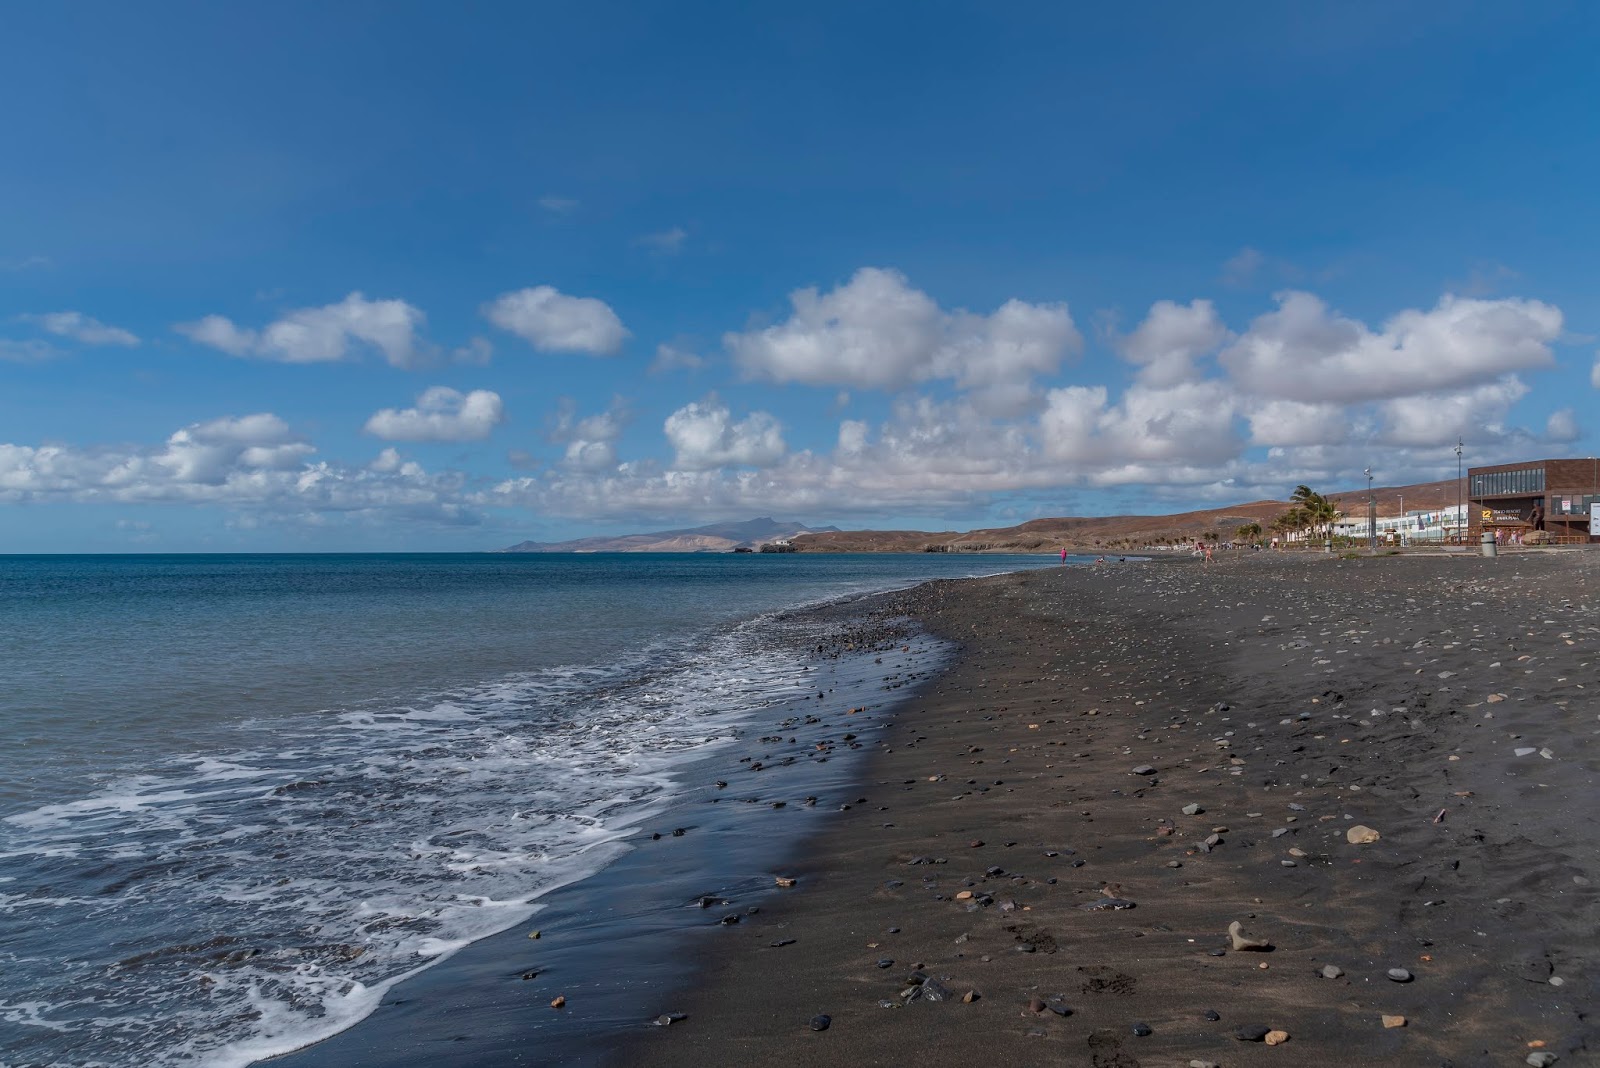 Foto de Playa negra Tarajalejo com baía espaçosa